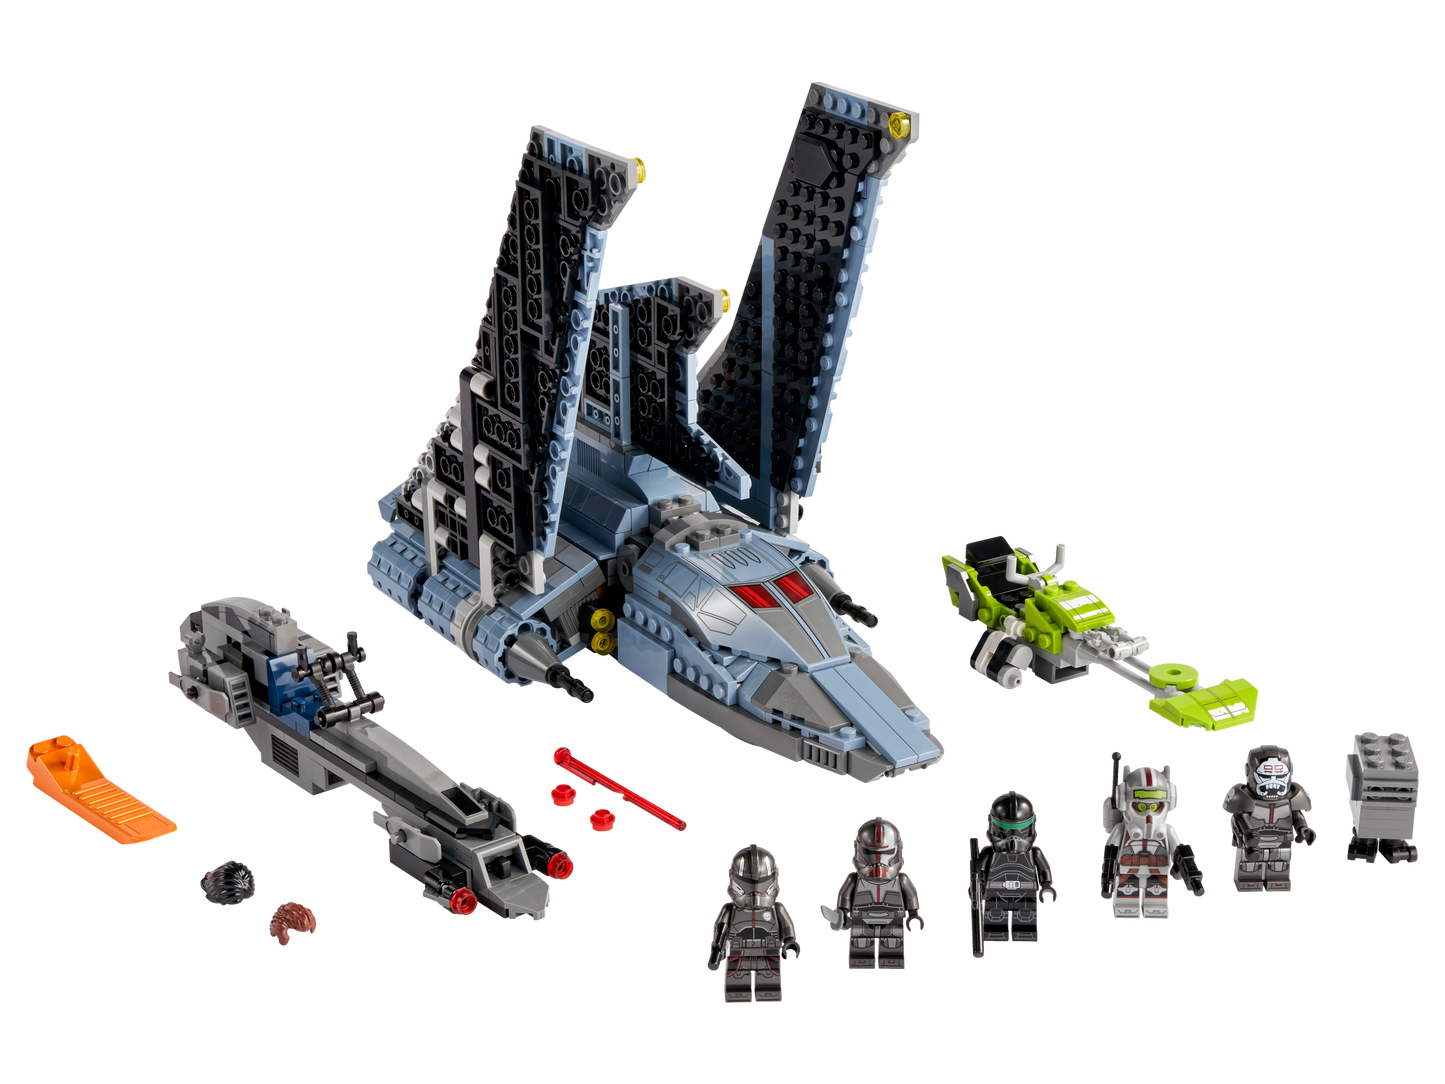 LEGO® EOL Star Wars 75314 Angriffsshuttle aus The Bad Batch™ - Wasserschaden